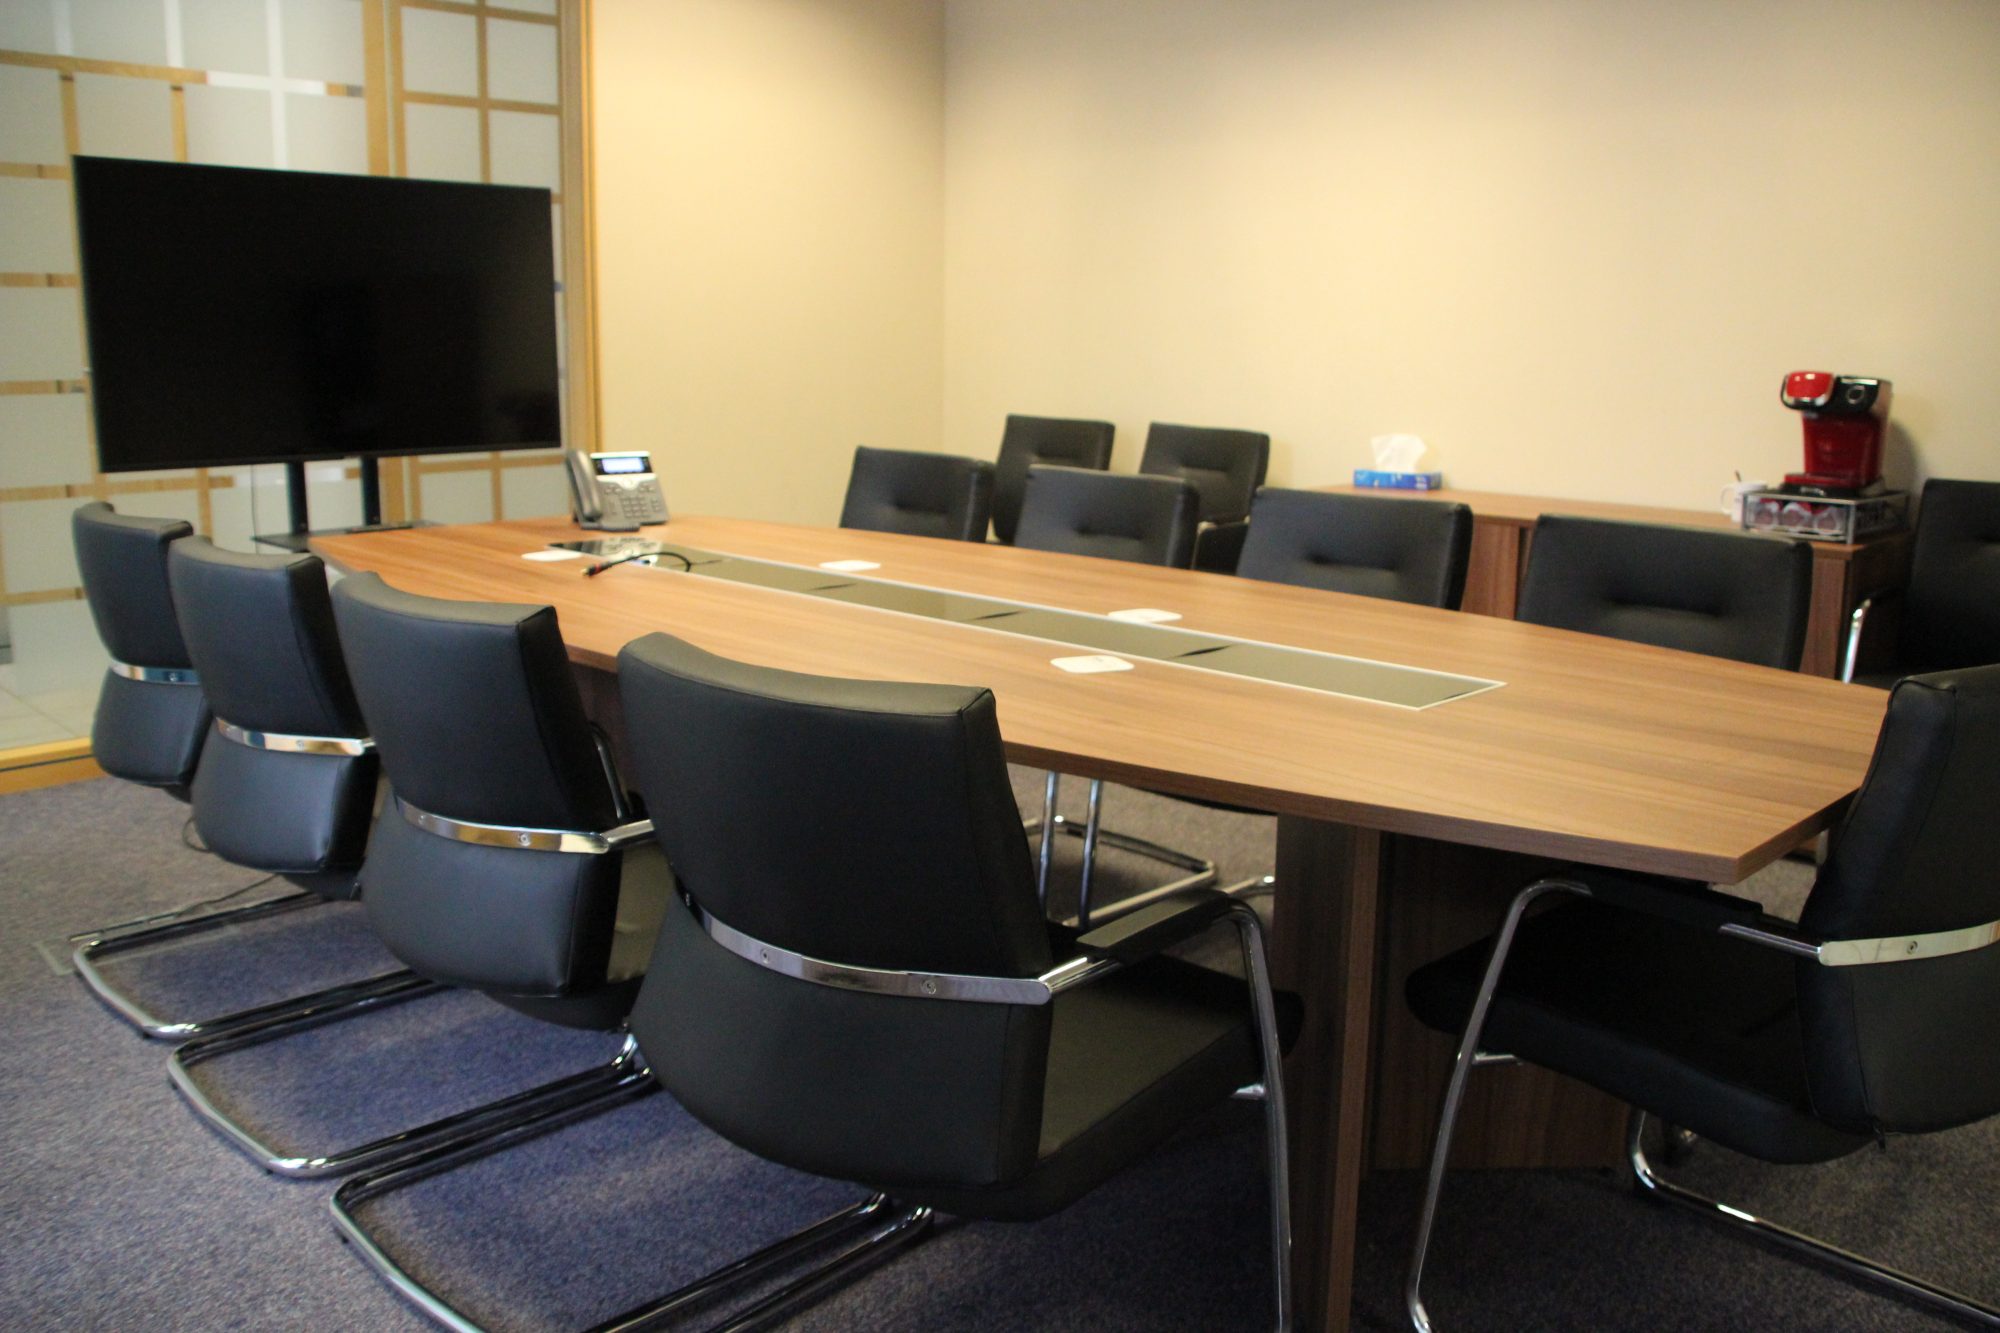 Sven Christiansen Ambus boardroom table with Mobili Vista Chairs